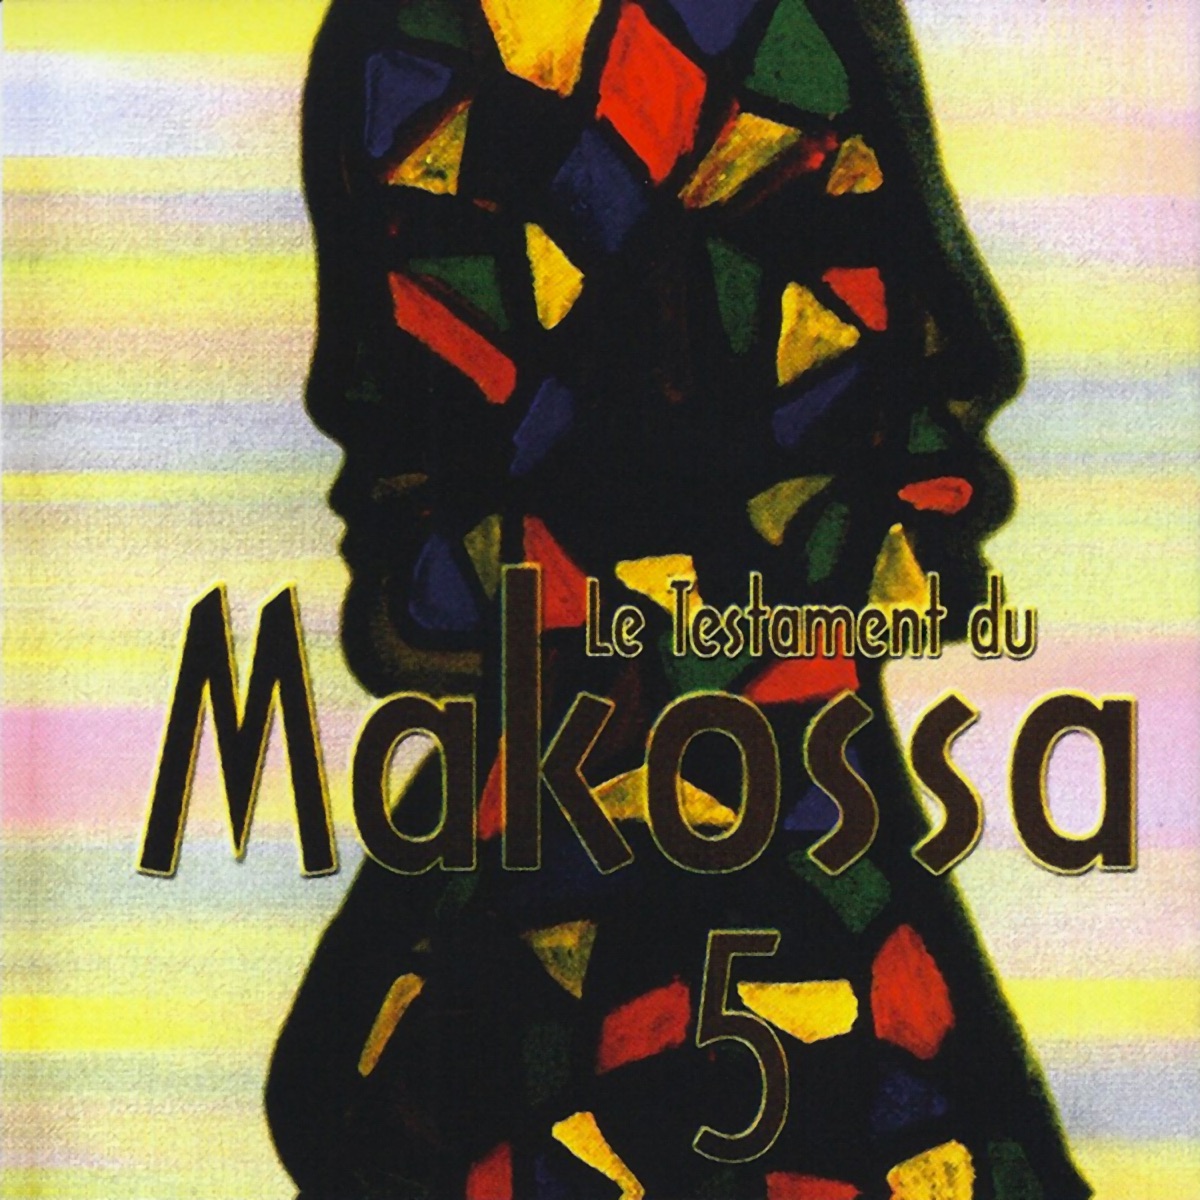 Le testament du makossa, Vol. 3 by Various Artists on Apple Music